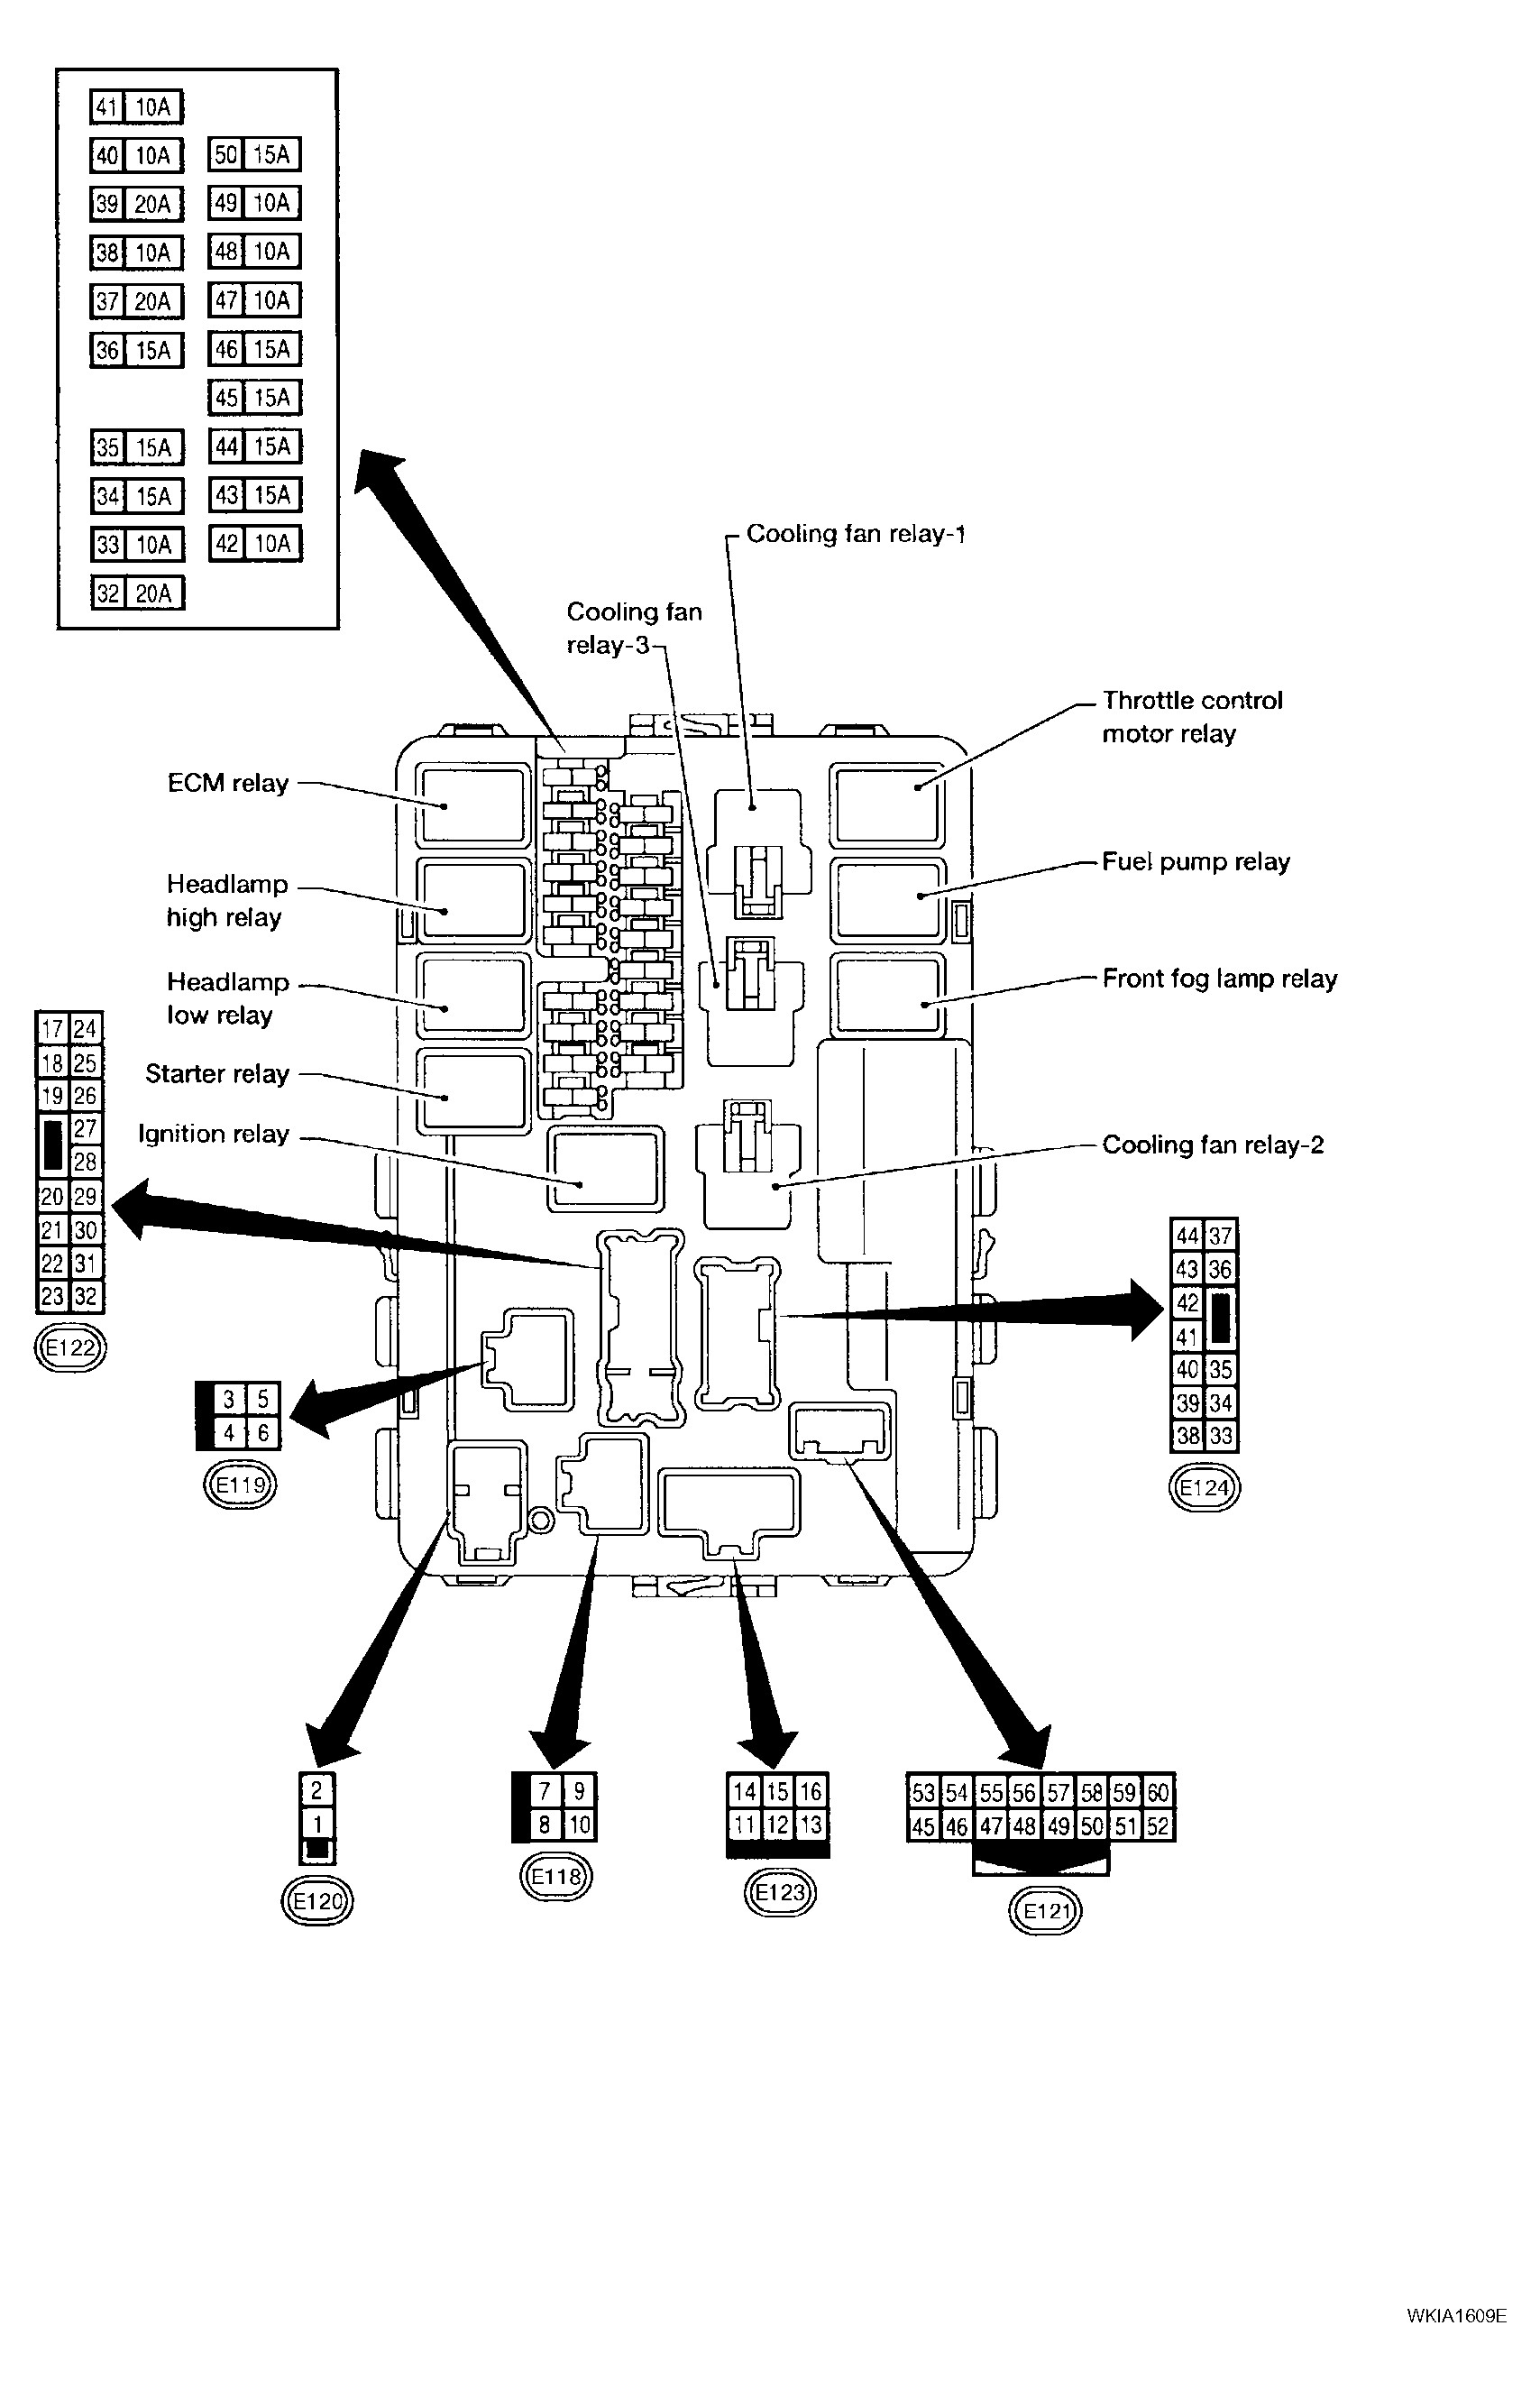 2000 Nissan Sentra Engine Diagram Nissan Maxima Engine Diagram Moreover Nissan Altima Engine Diagram